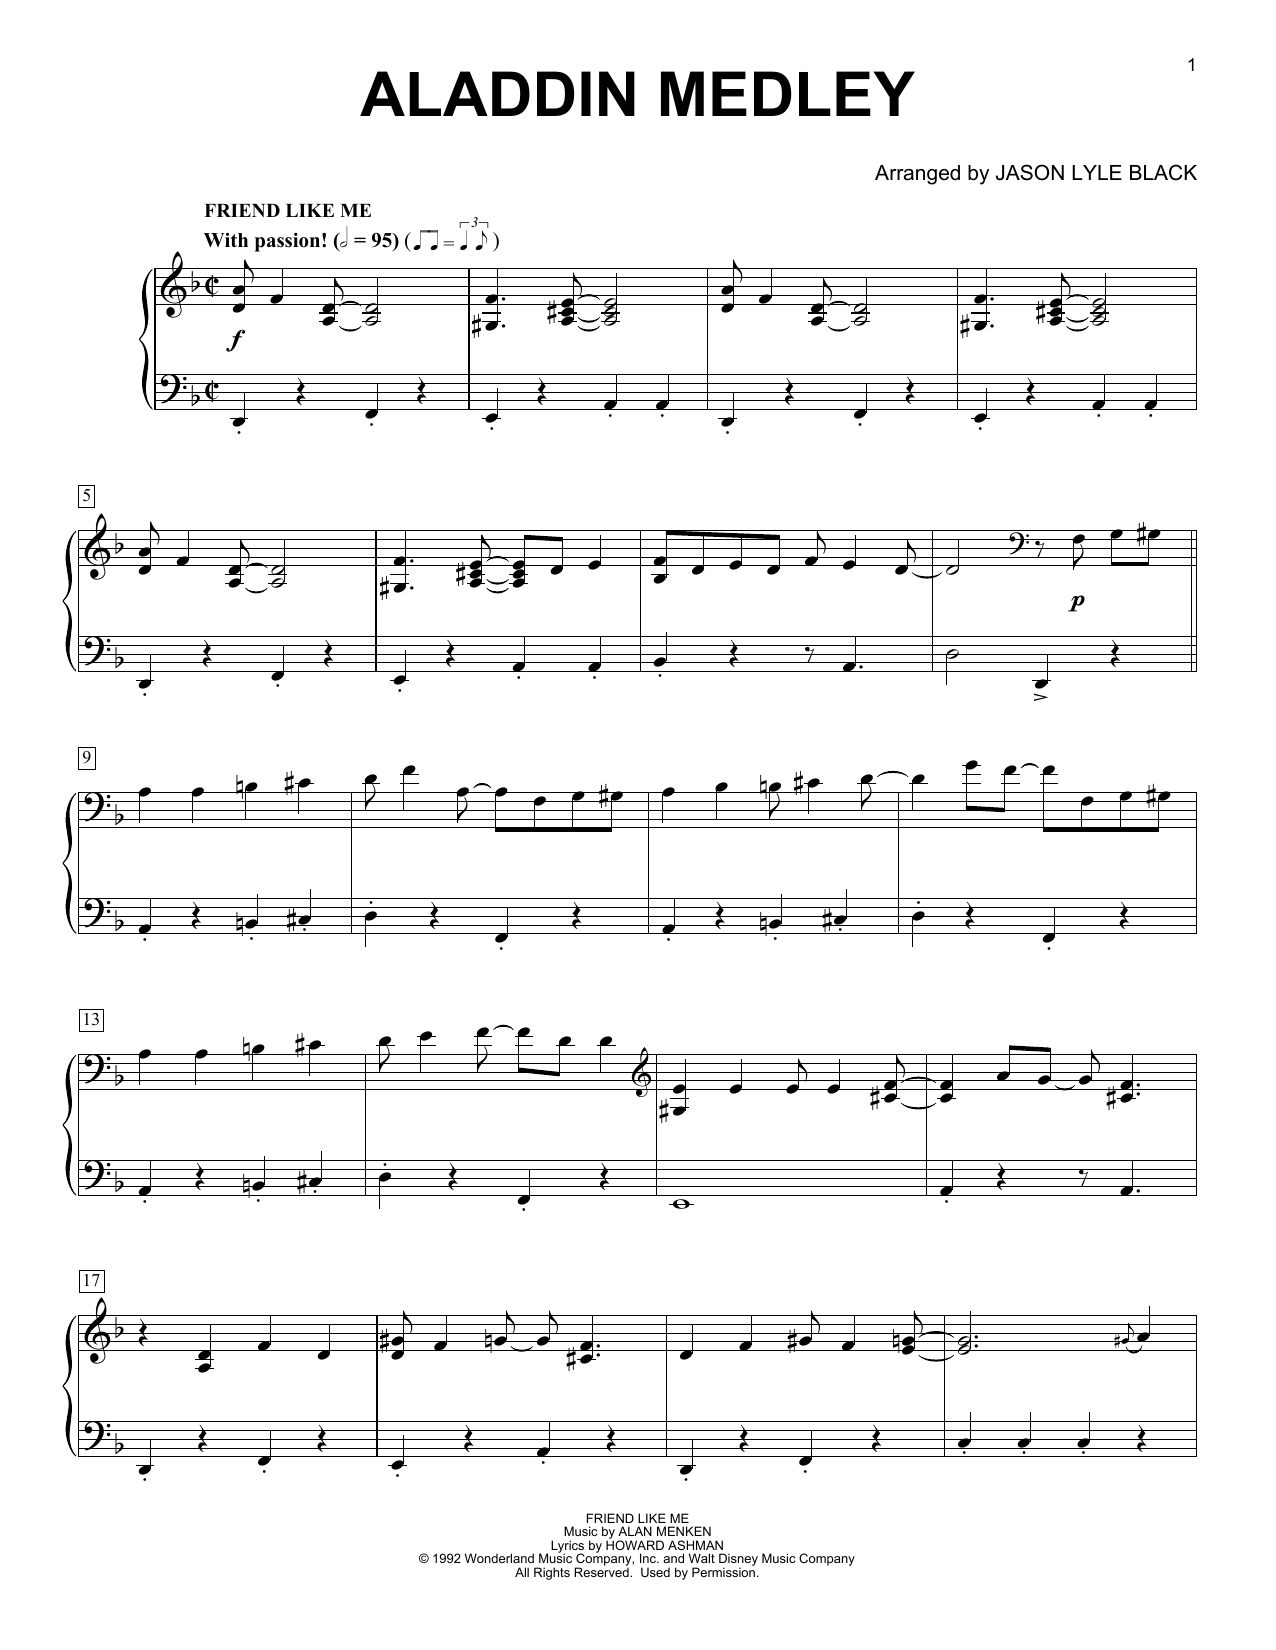 Alan Menken, Howard Ashman and Tim Rice Aladdin Medley (arr. Jason Lyle Black) Sheet Music Notes & Chords for Piano - Download or Print PDF